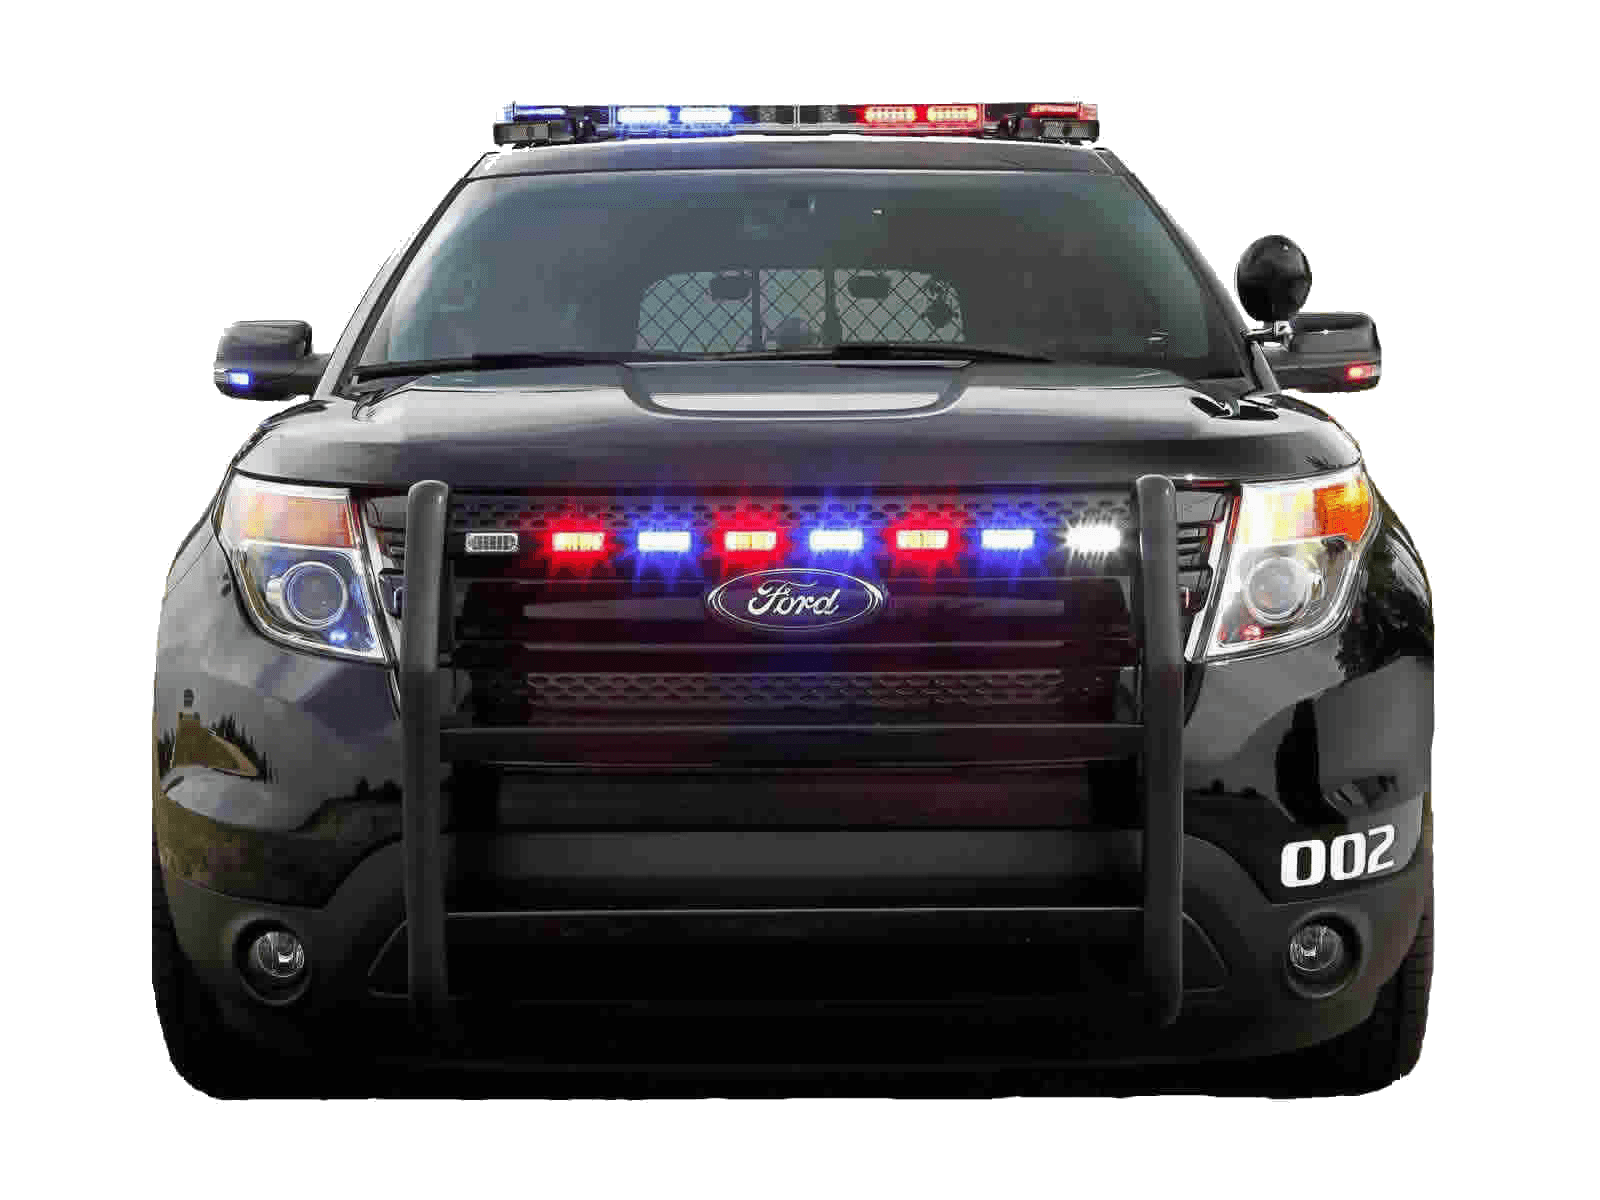 Black Ford Police Interceptor